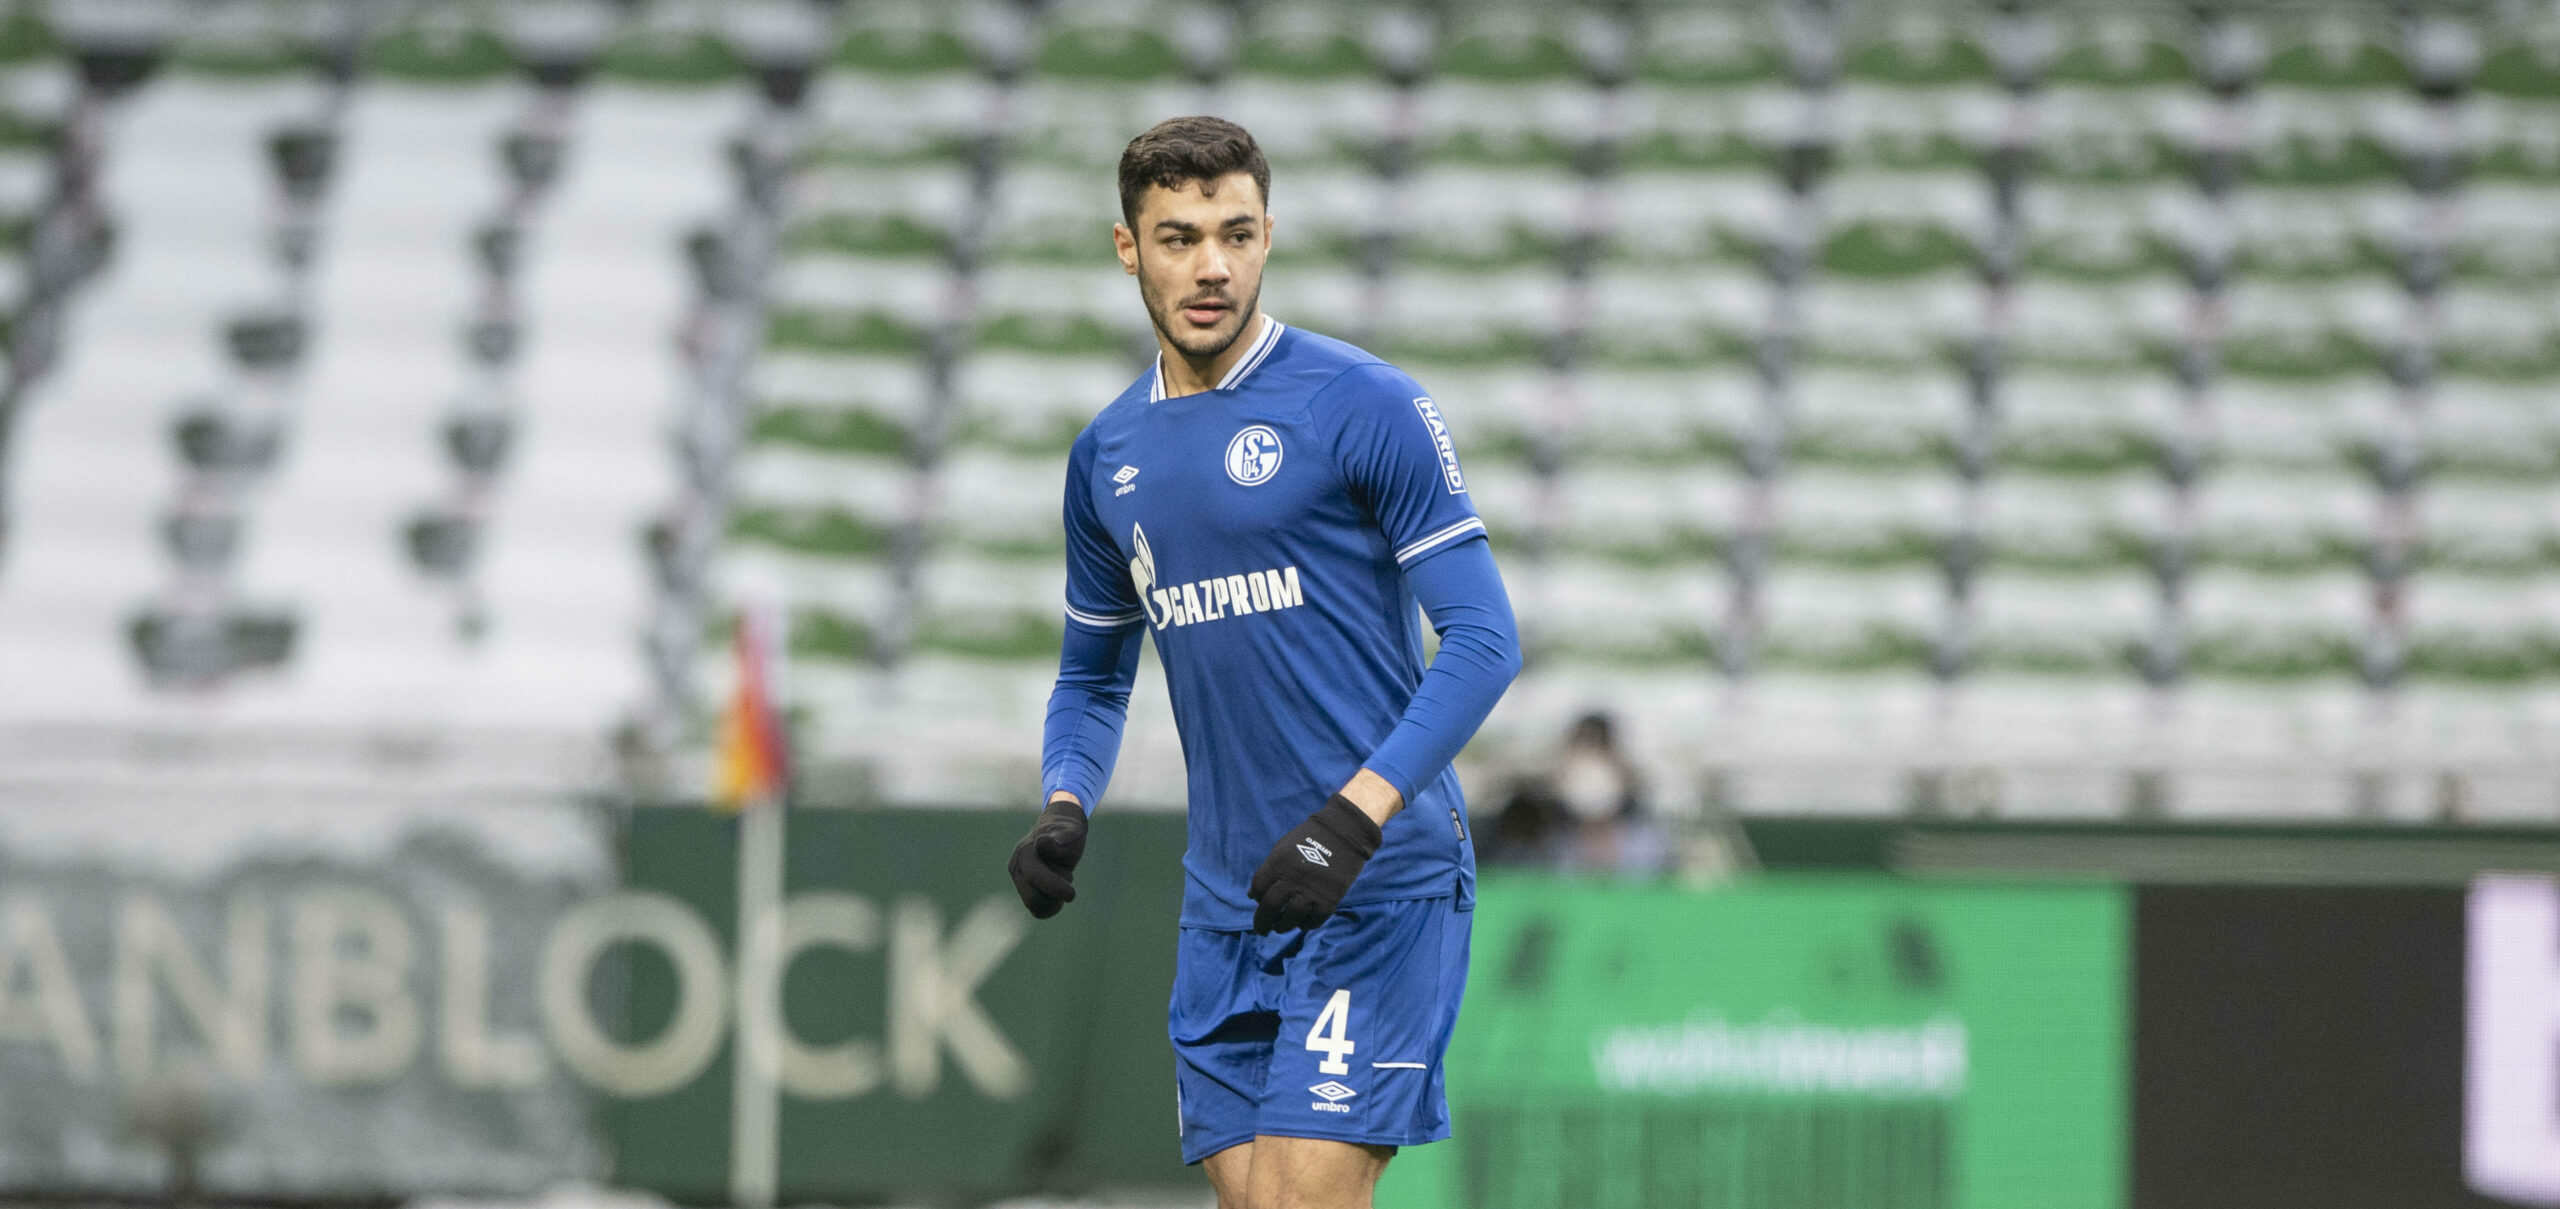 FC Schalke 04 zittert um Gewinn aus Kabak-Verkauf